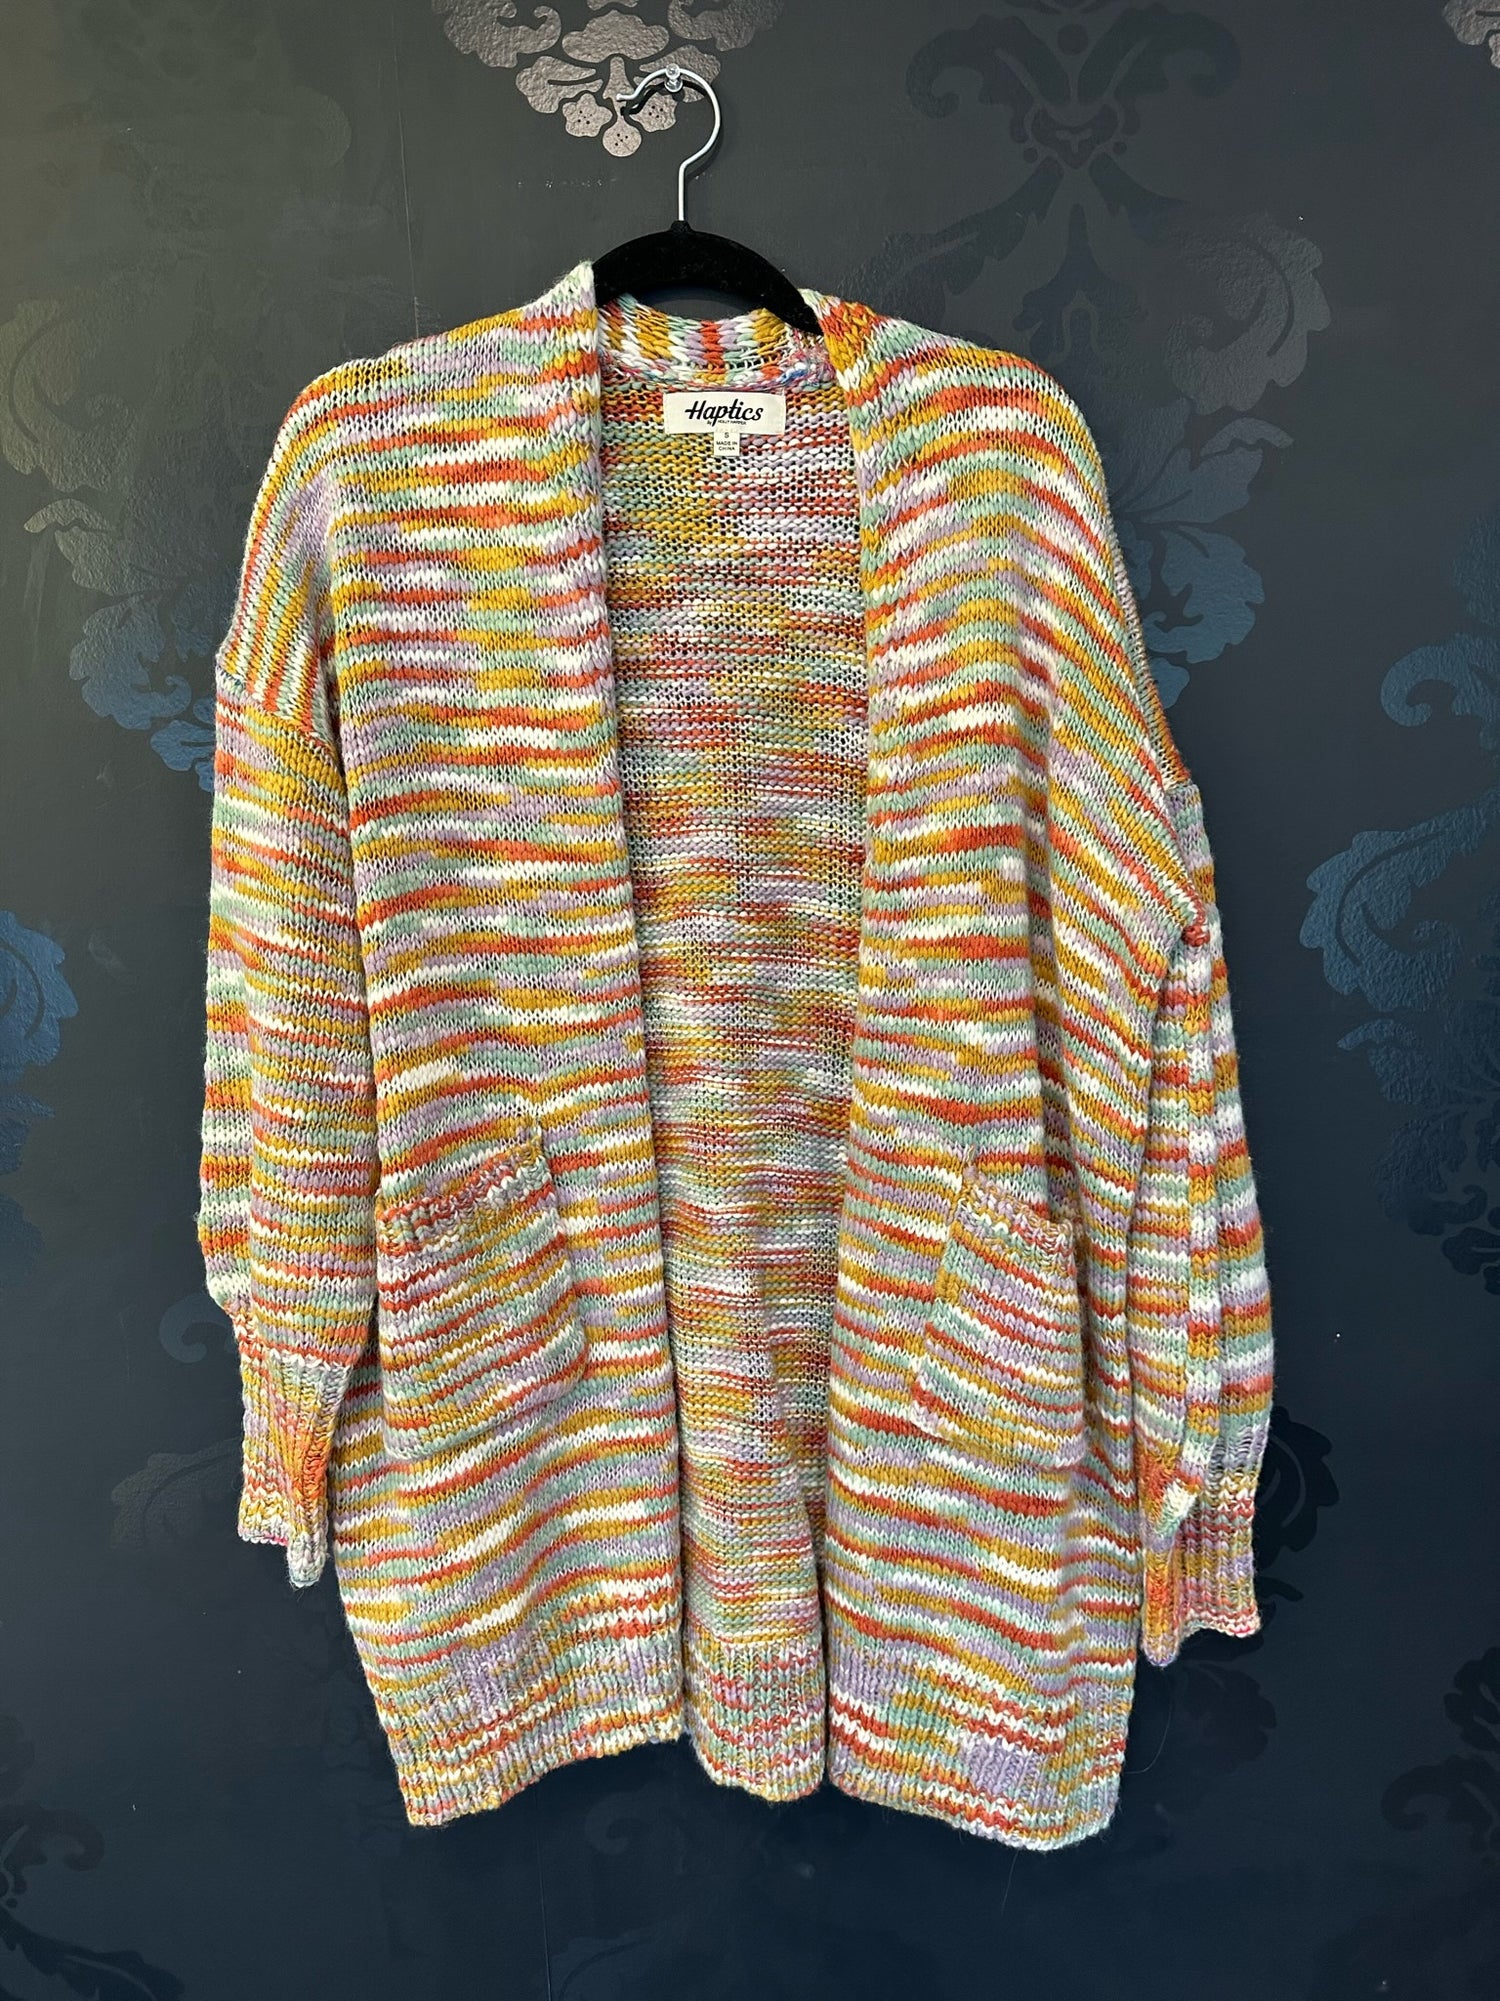 Size Small Multi Color Striped Knit Cardigan